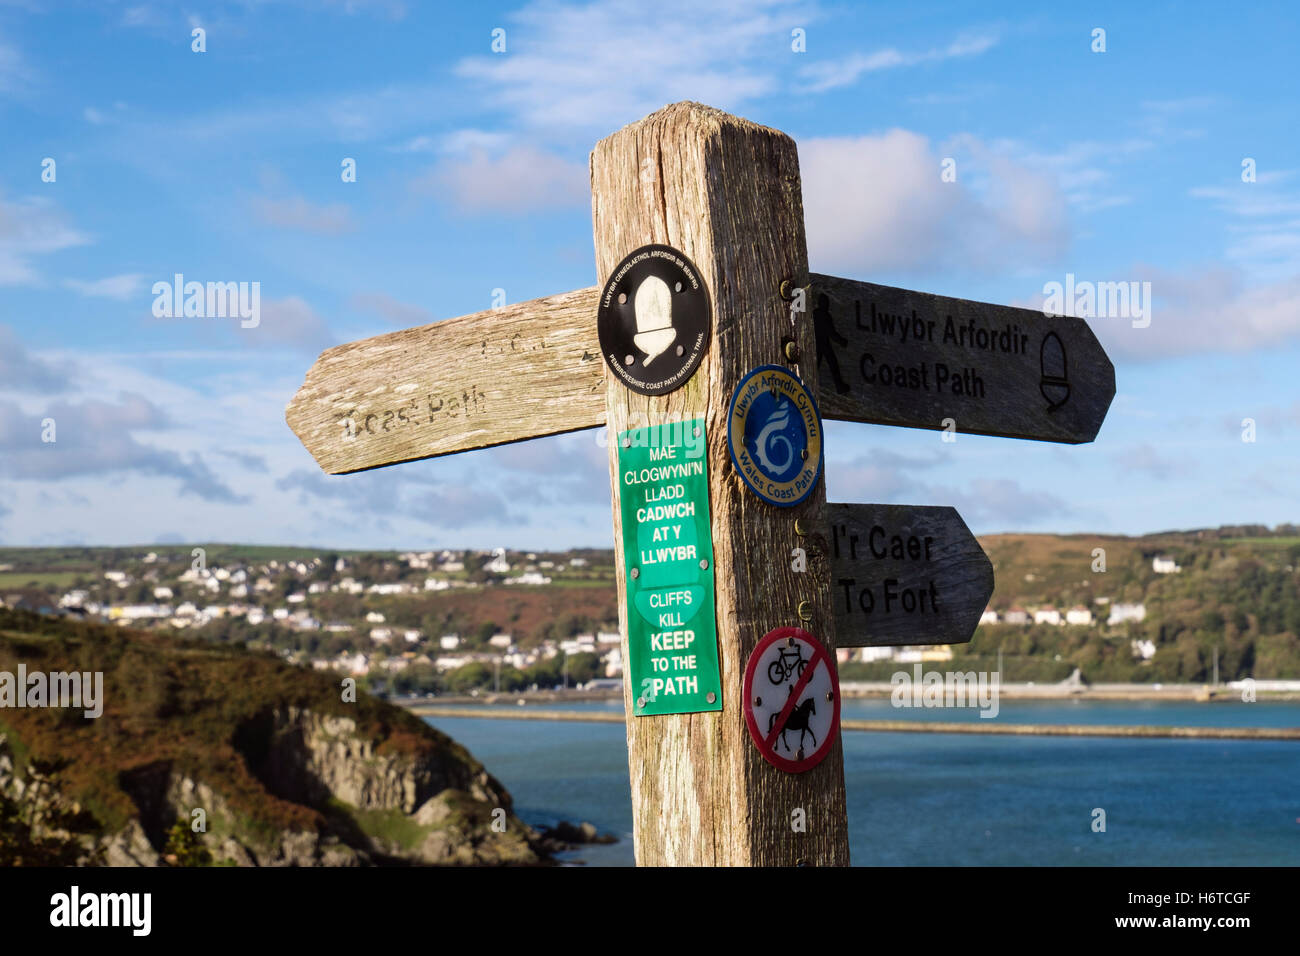 Zweisprachige Pembrokeshire Coast Path National Trail Wegweiser mit Eichel-Logo. Fishguard Pembrokeshire Wales UK Großbritannien Stockfoto